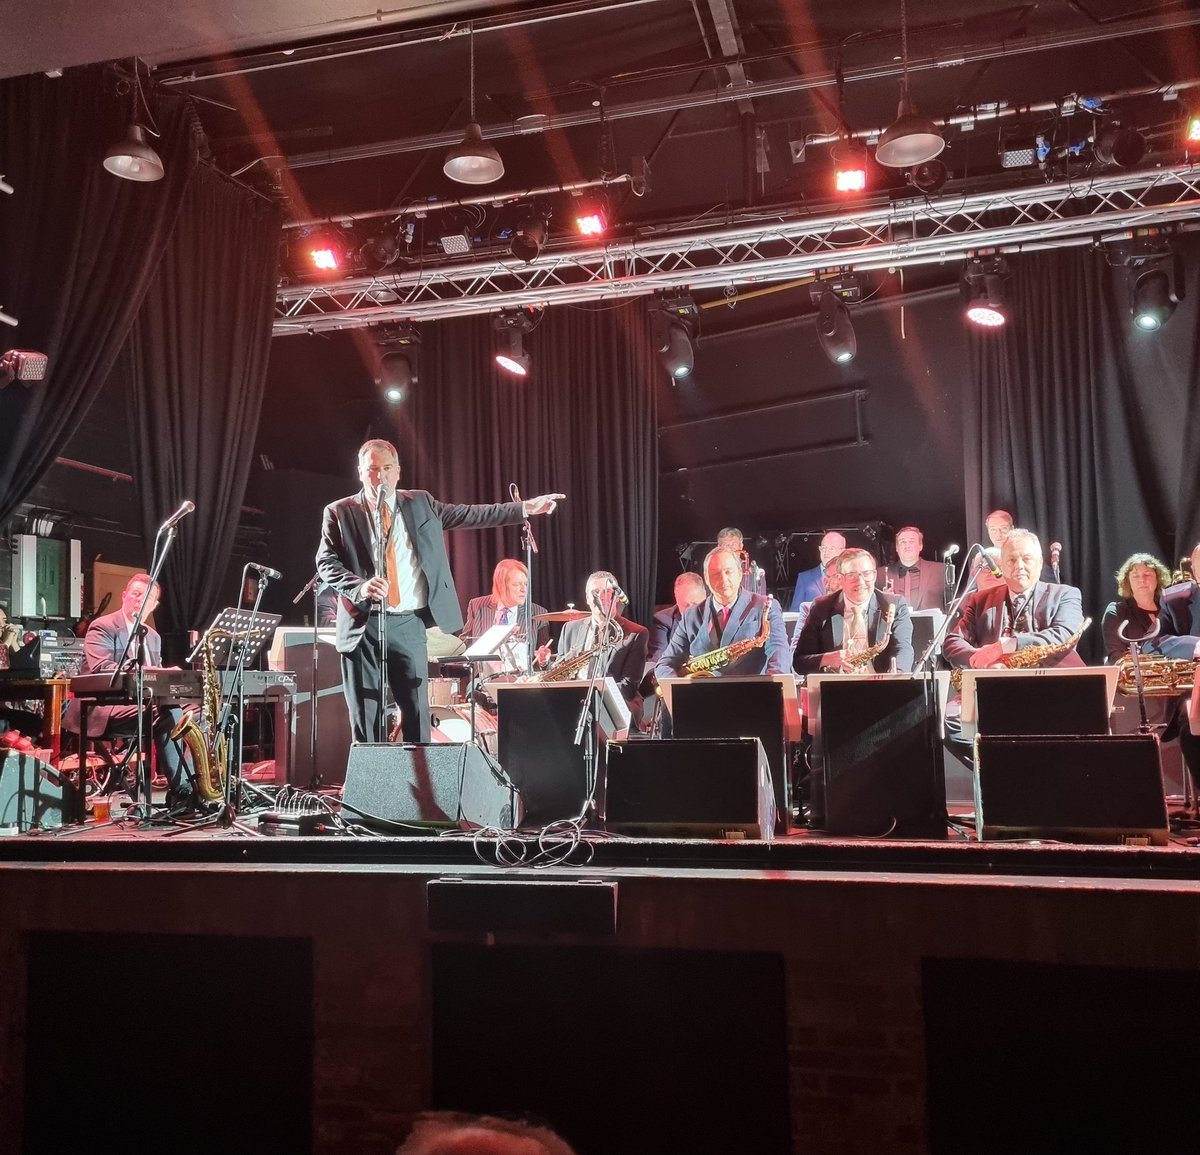 Really enjoy the Simon Spillett Big Band concert last night at 229 Great Portland St London @BensRecords @GuildfordJazz @SimonSpillett @JazzJournal @MattersJazz @JazzTurf @EpsomJazzClub @TheJazzPodcast